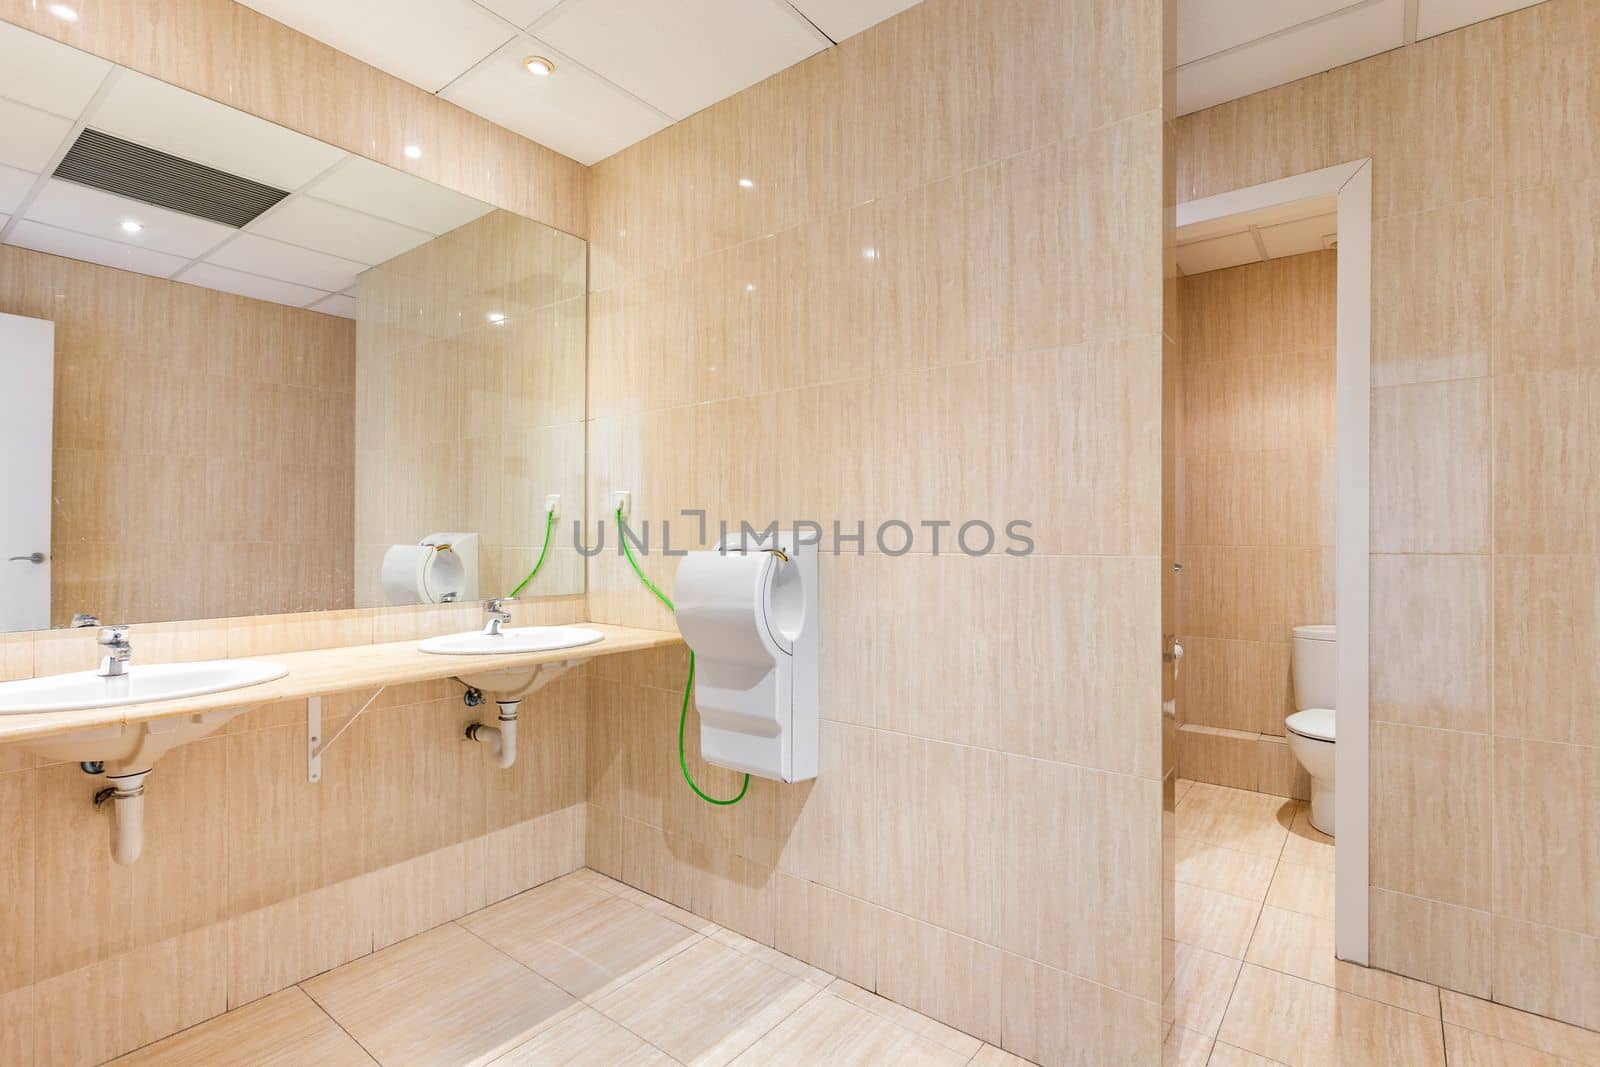 Public toilet with big mirror, handwashers, dryer and wc doors